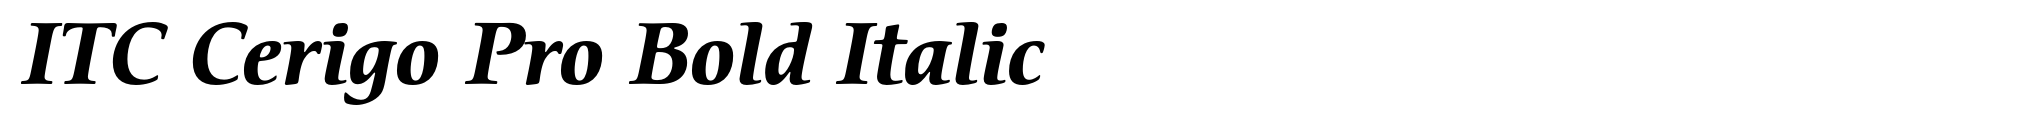 ITC Cerigo Pro Bold Italic image